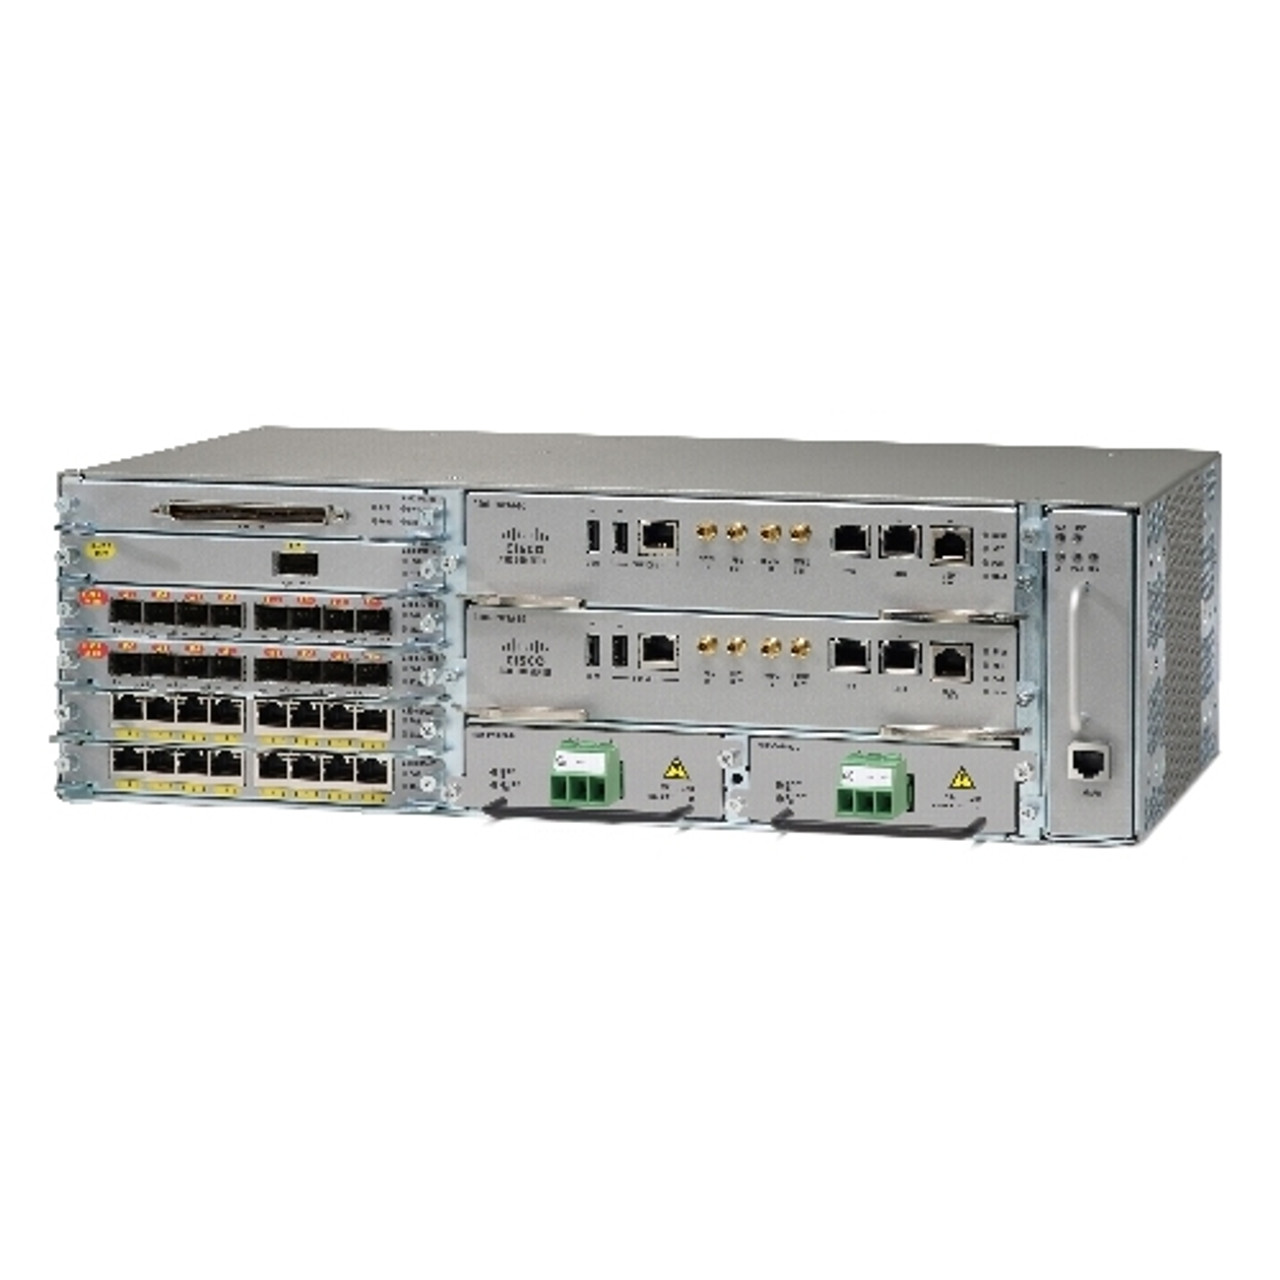 A900-IMA8S Cisco ASR903 8-port Gigabit Ethernet Interface Module